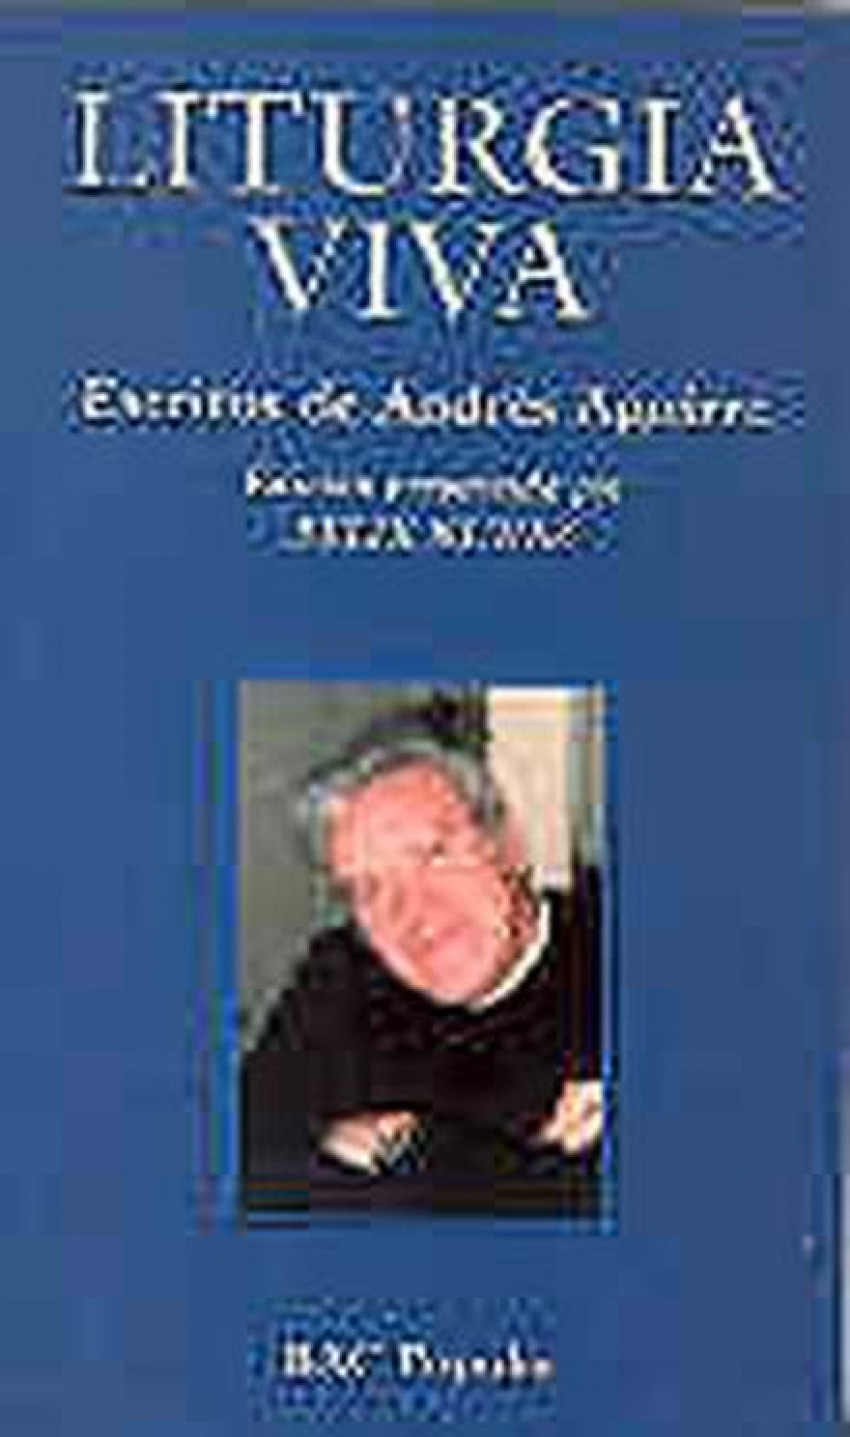 Liturgia viva.Escritos de Andrés Aguirre - Aguirre, Andrés